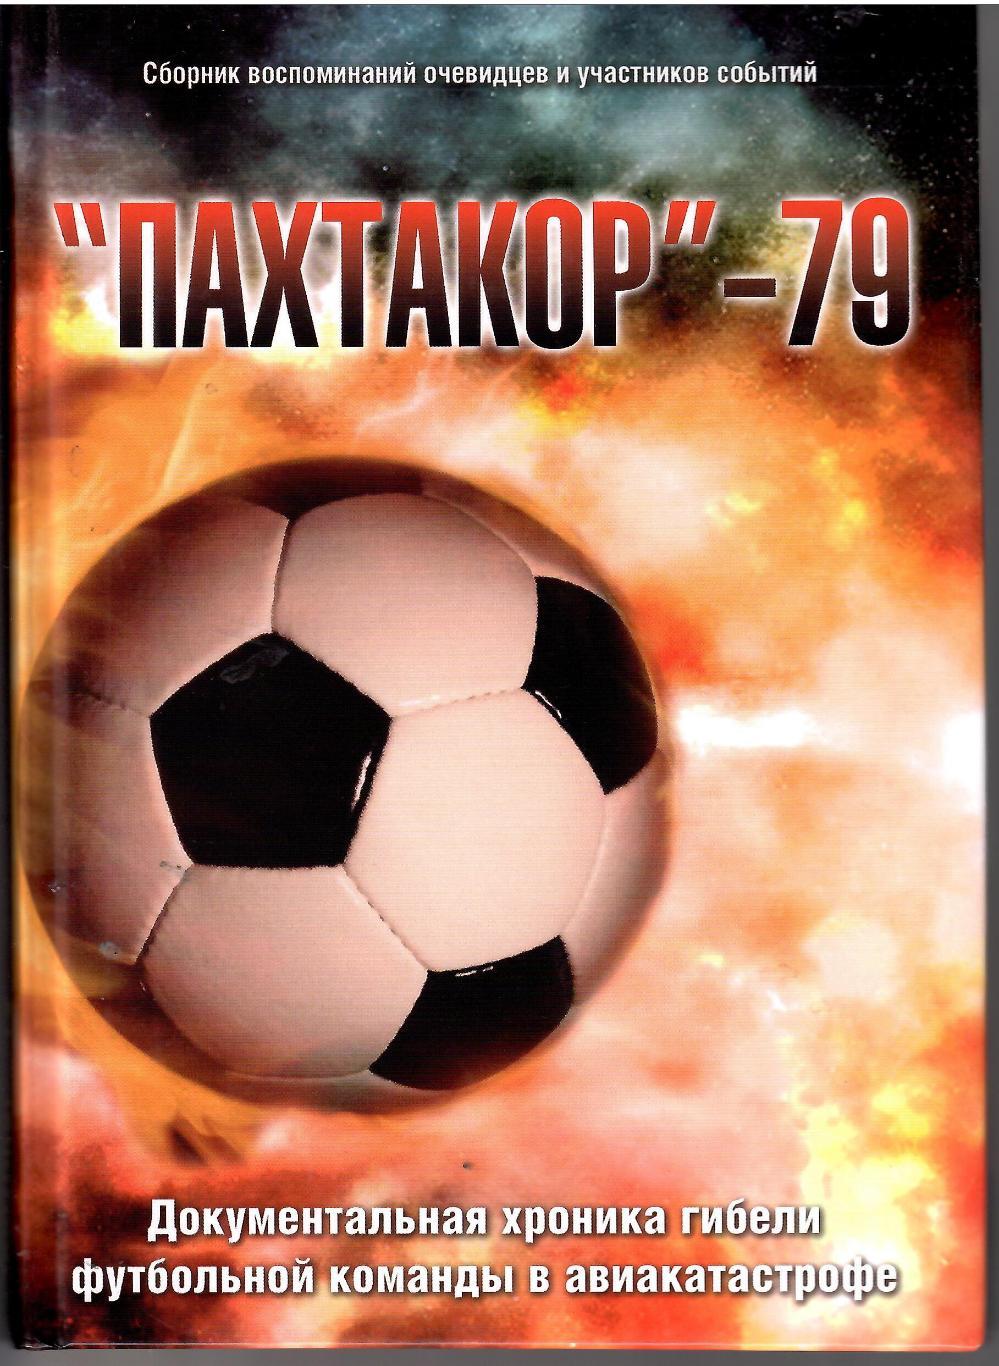 2004 ПАХТАКОР-79 Издательство Санжар Москва 192 стр